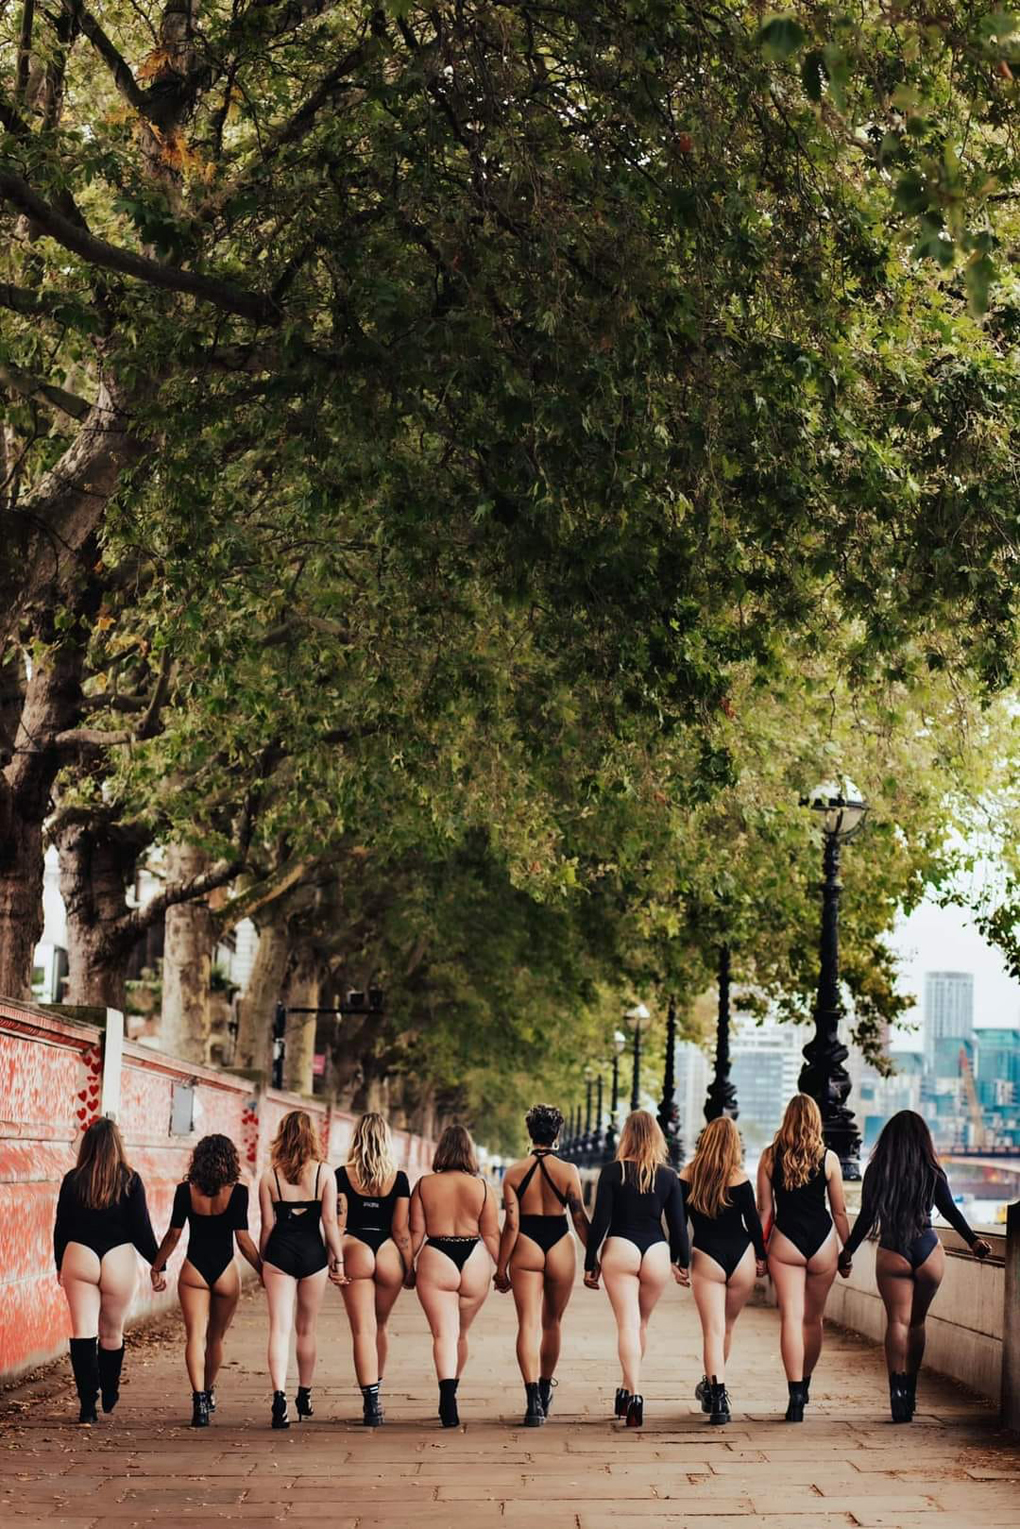 Ten women walking away from the camera in limited attire